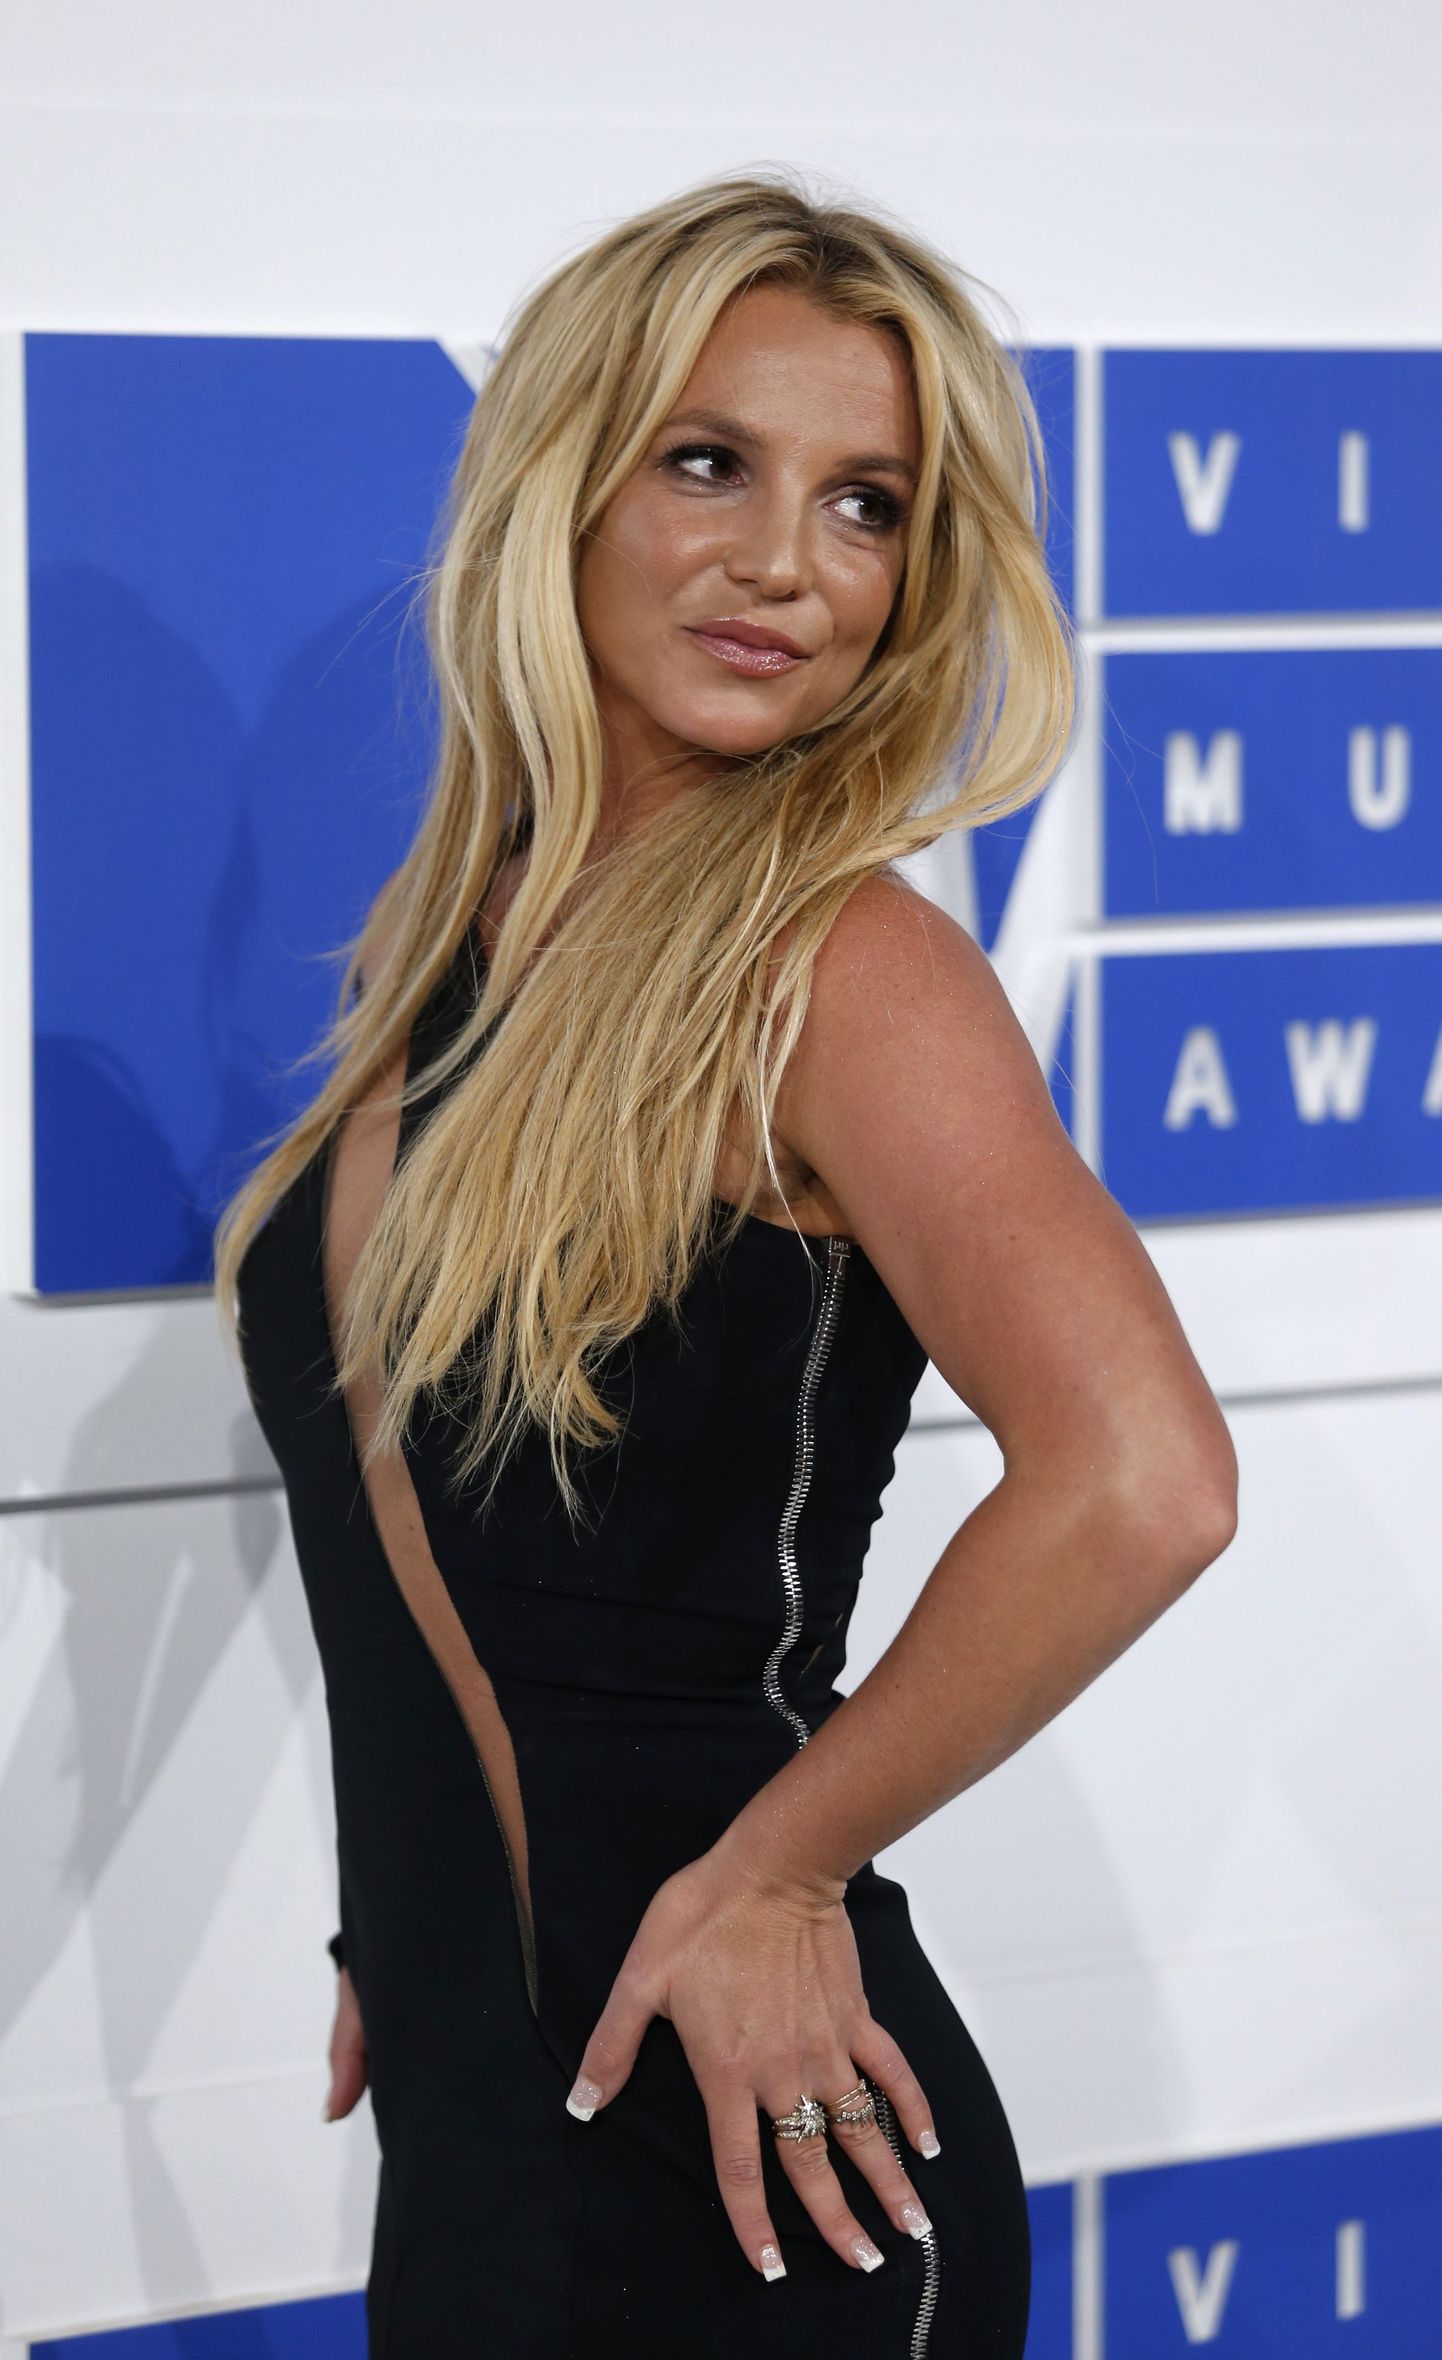 Singer Britney Spears arrives at the 2016 MTV Video Music Awards in New York, U.S., August 28, 2016.  REUTERS/Eduardo Munoz